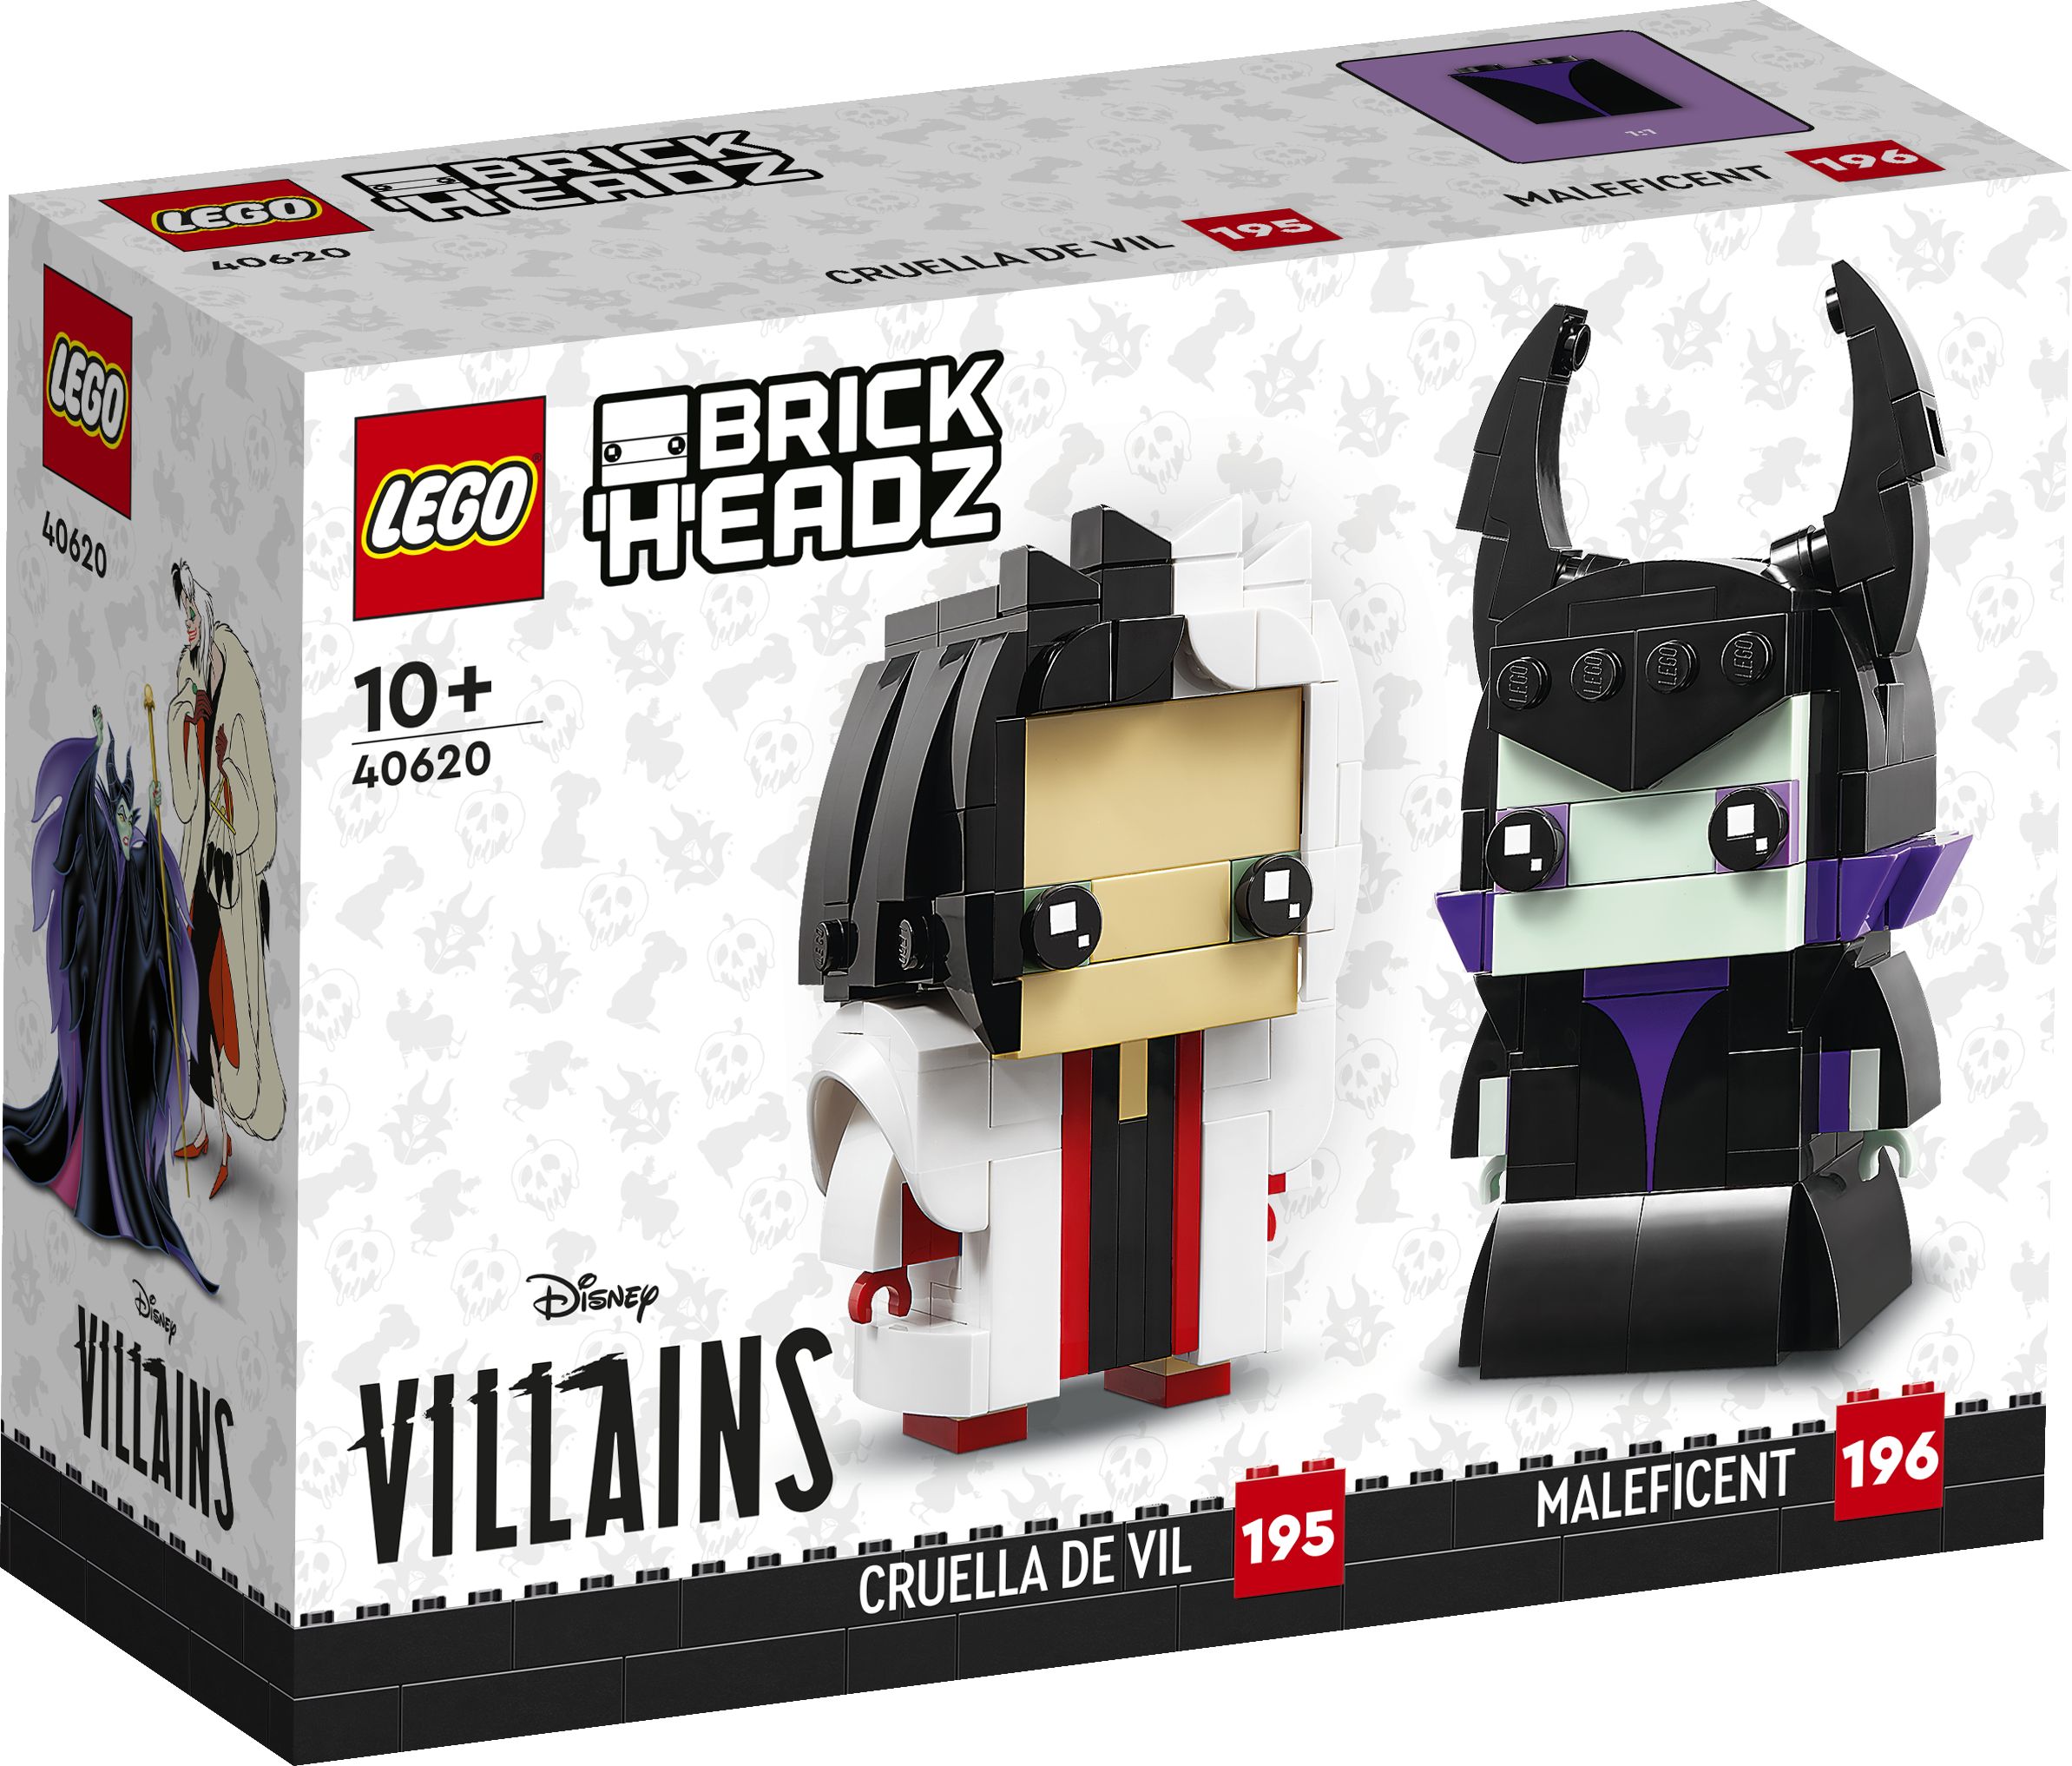 LEGO BrickHeadz 40620 Cruella und Maleficent LEGO_40620_Box1_v29.jpg